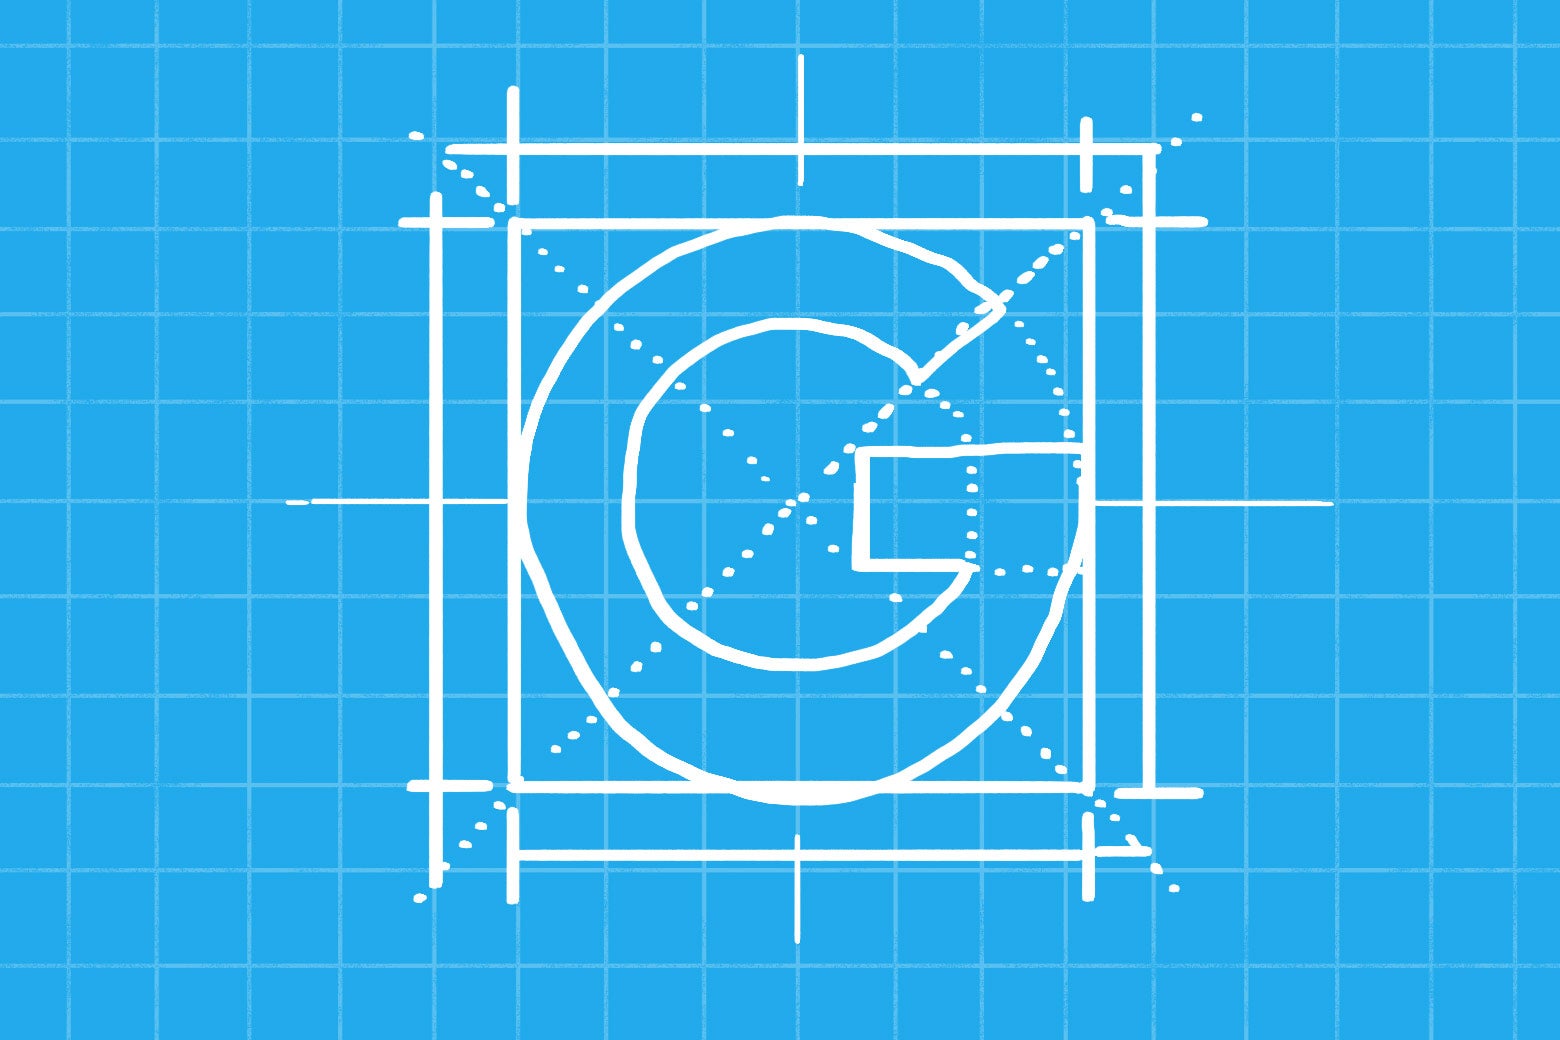 The Google logo in blueprint form.